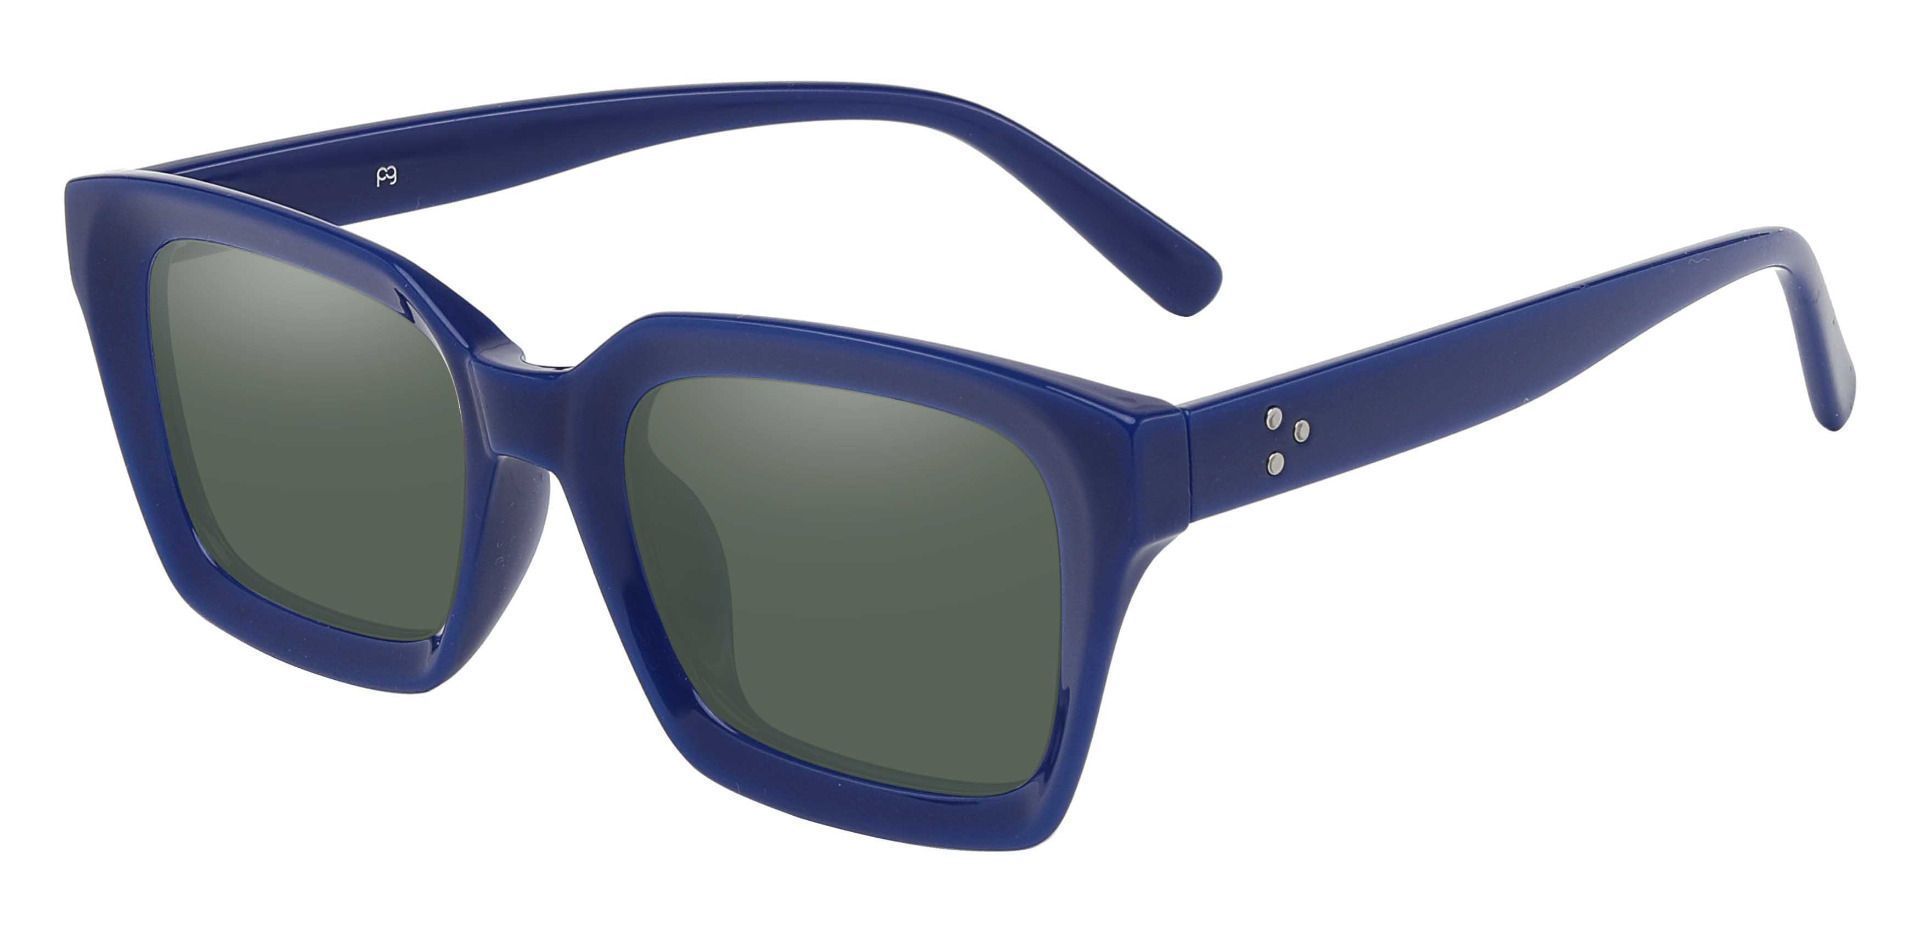 Unity Rectangle Progressive Sunglasses - Blue Frame With Green Lenses